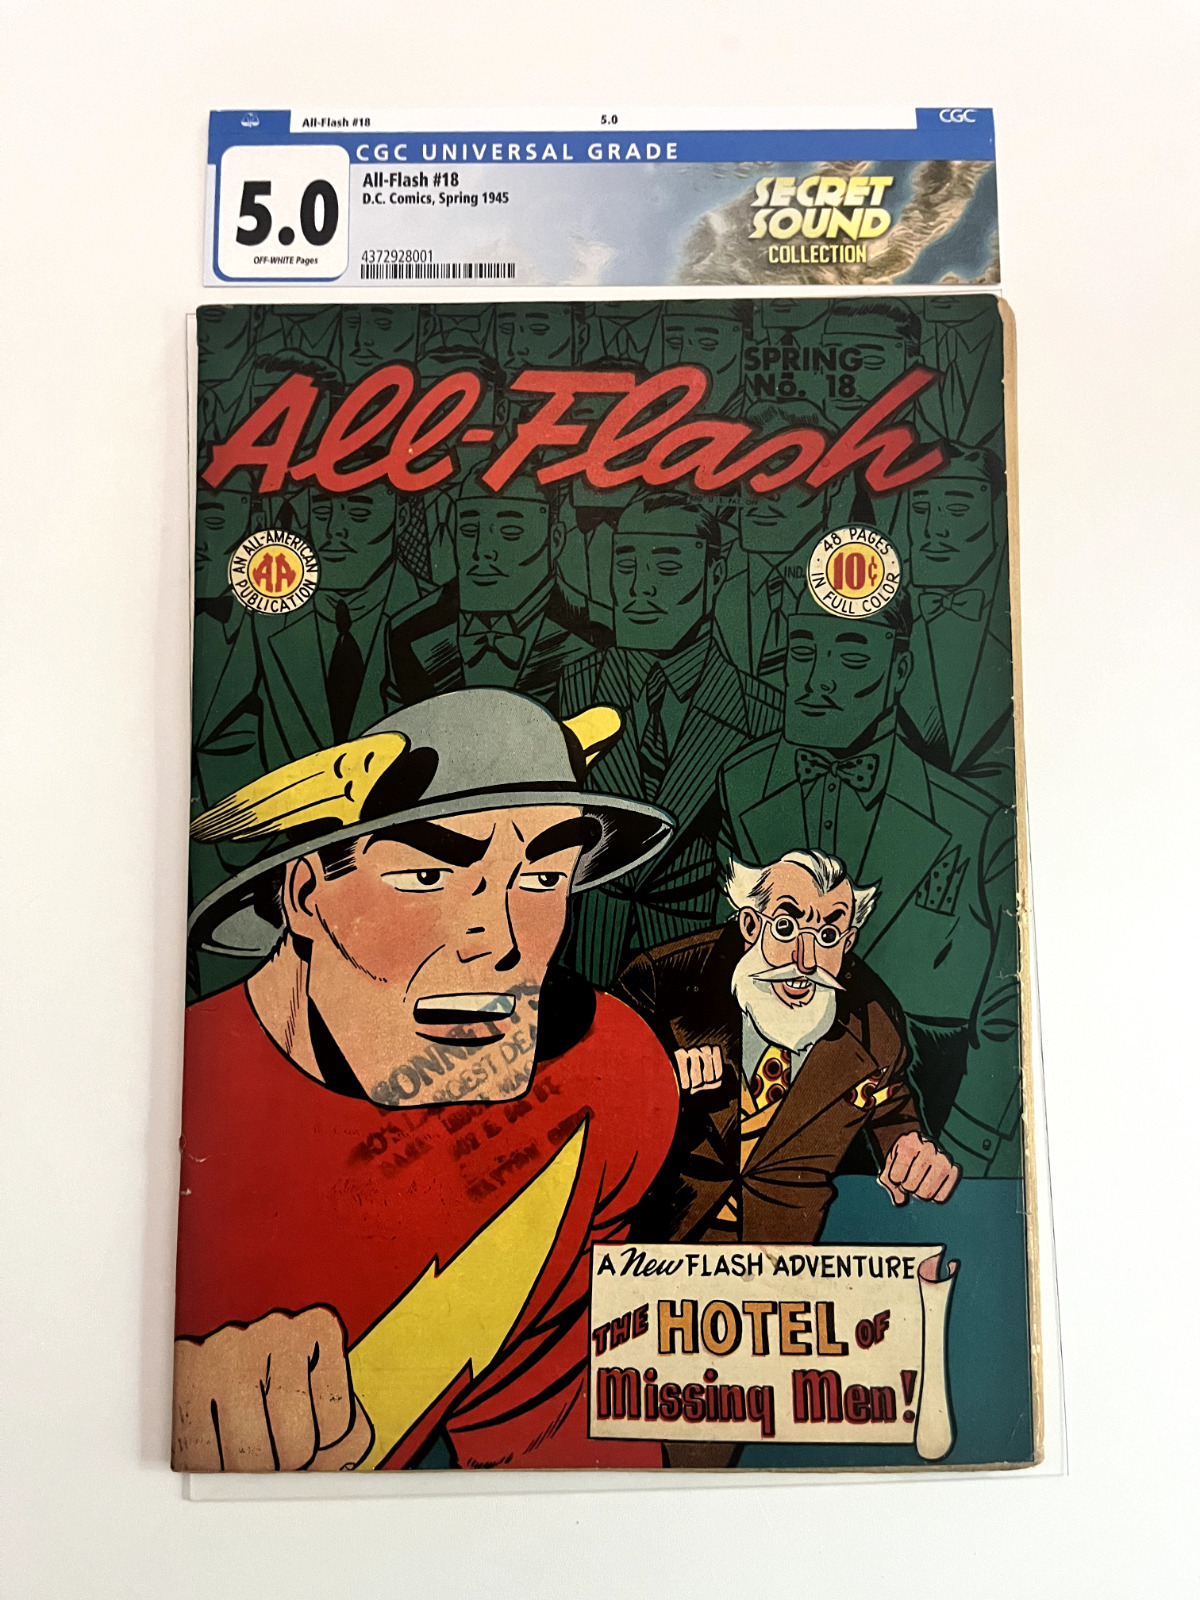 All-Flash Comics 18 (1945 DC Comics) Rare Secret Sound Collection [VG/FN]